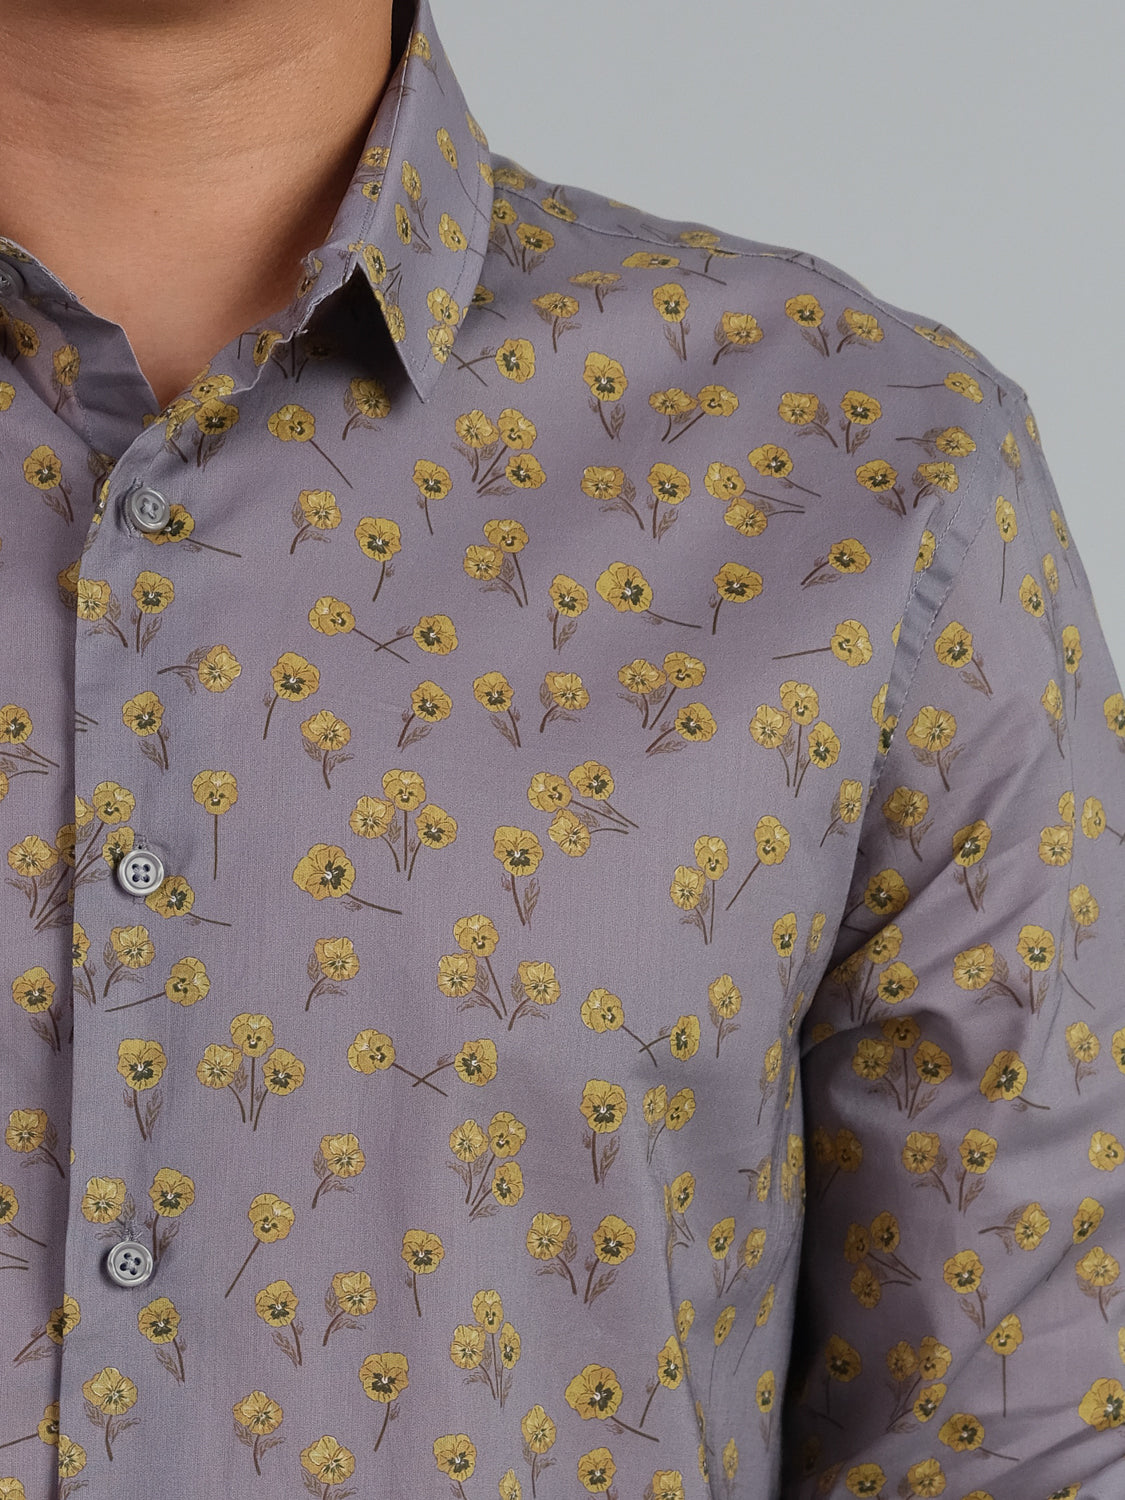 Yellow Pansies Long Sleeve 100% Cotton Printed Shirt